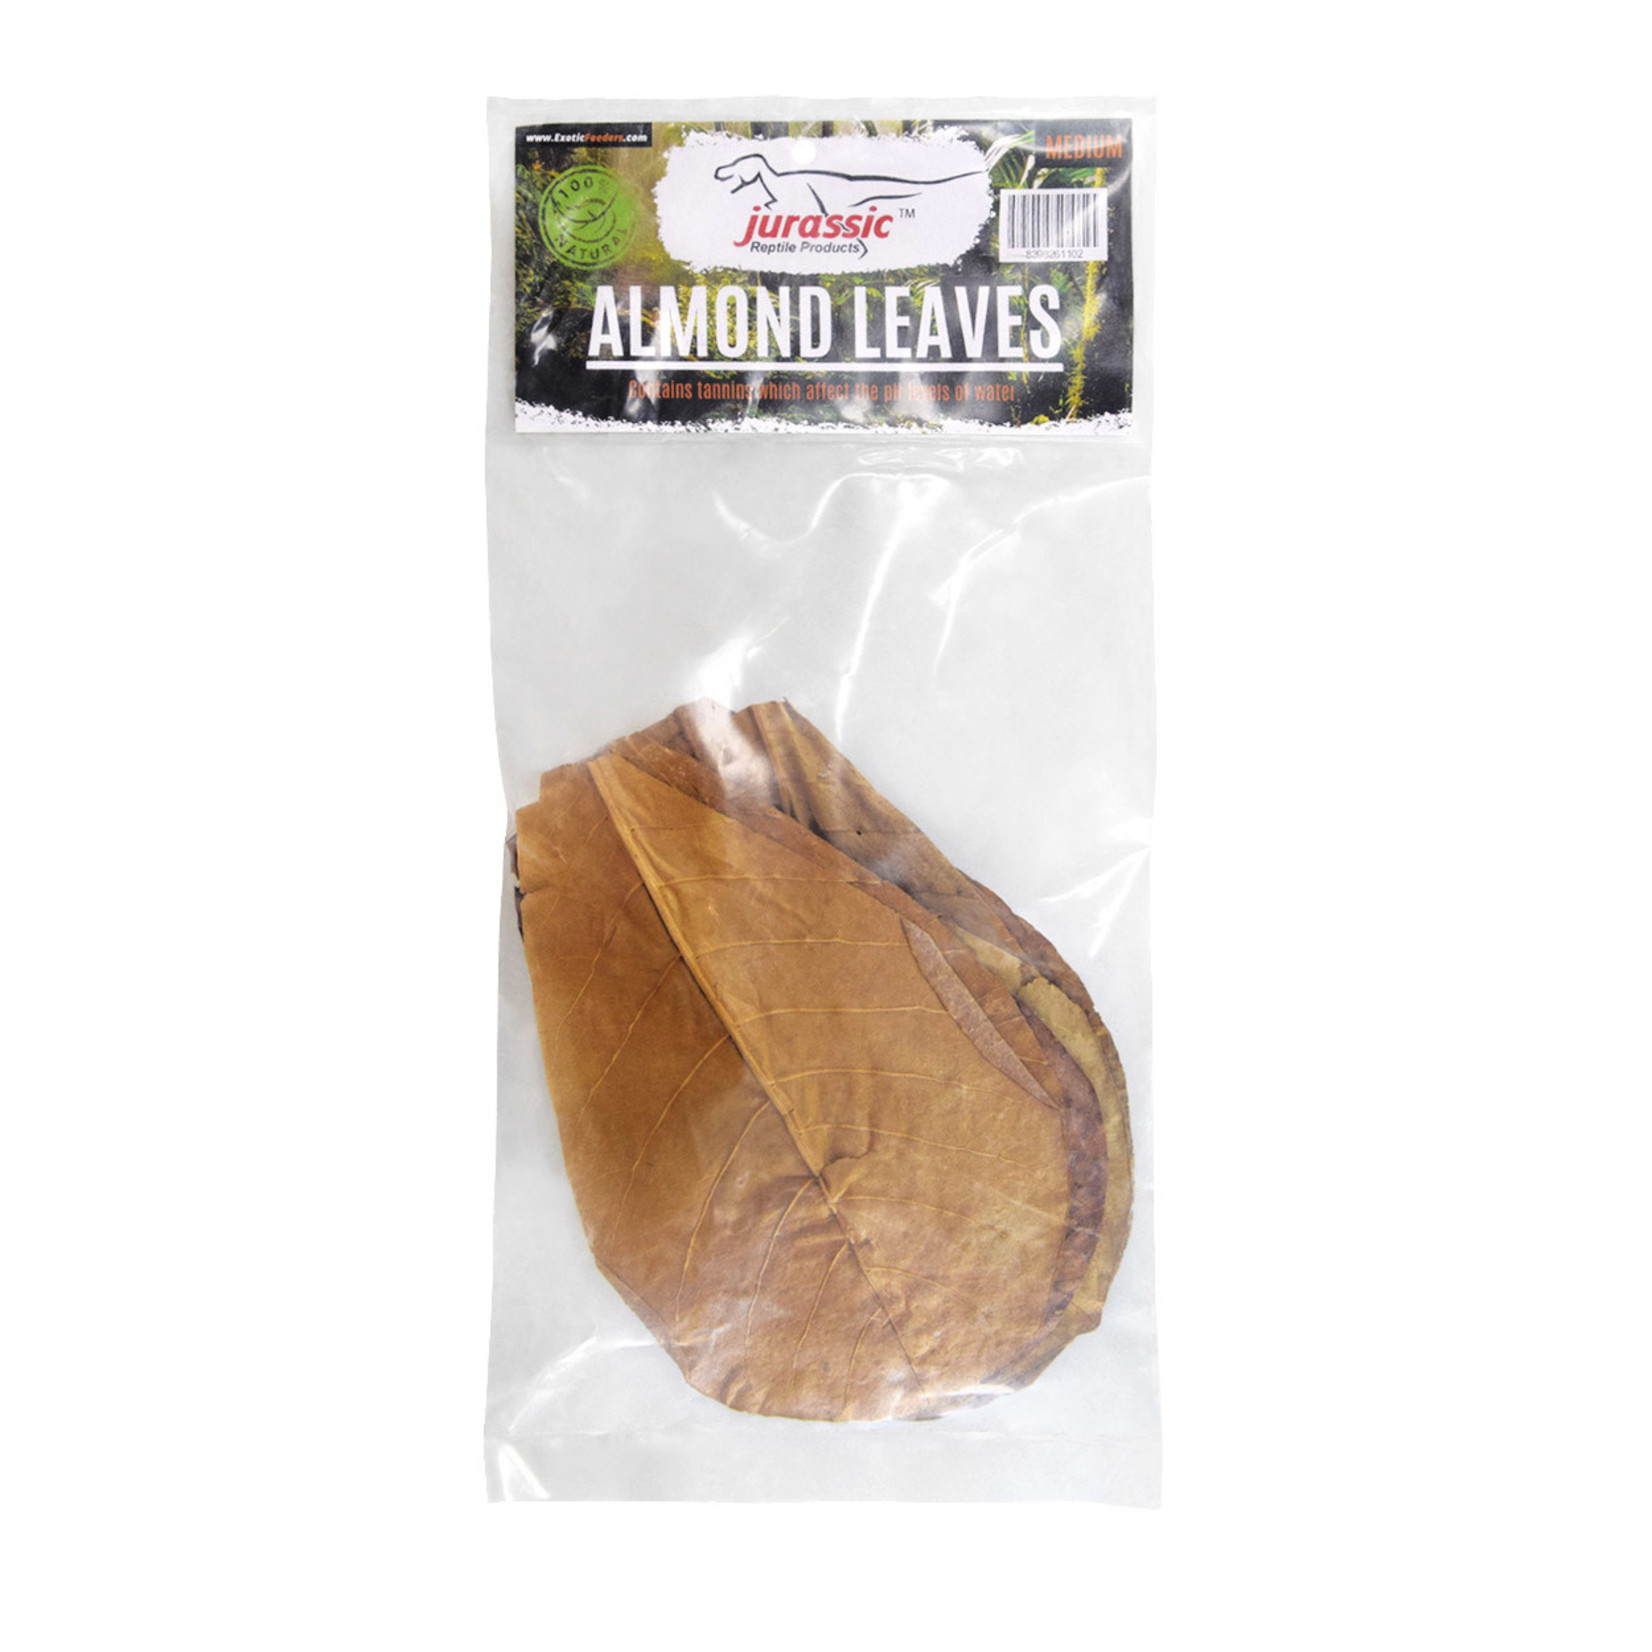 JURASSIC Jurassic Almond Leaves - Medium